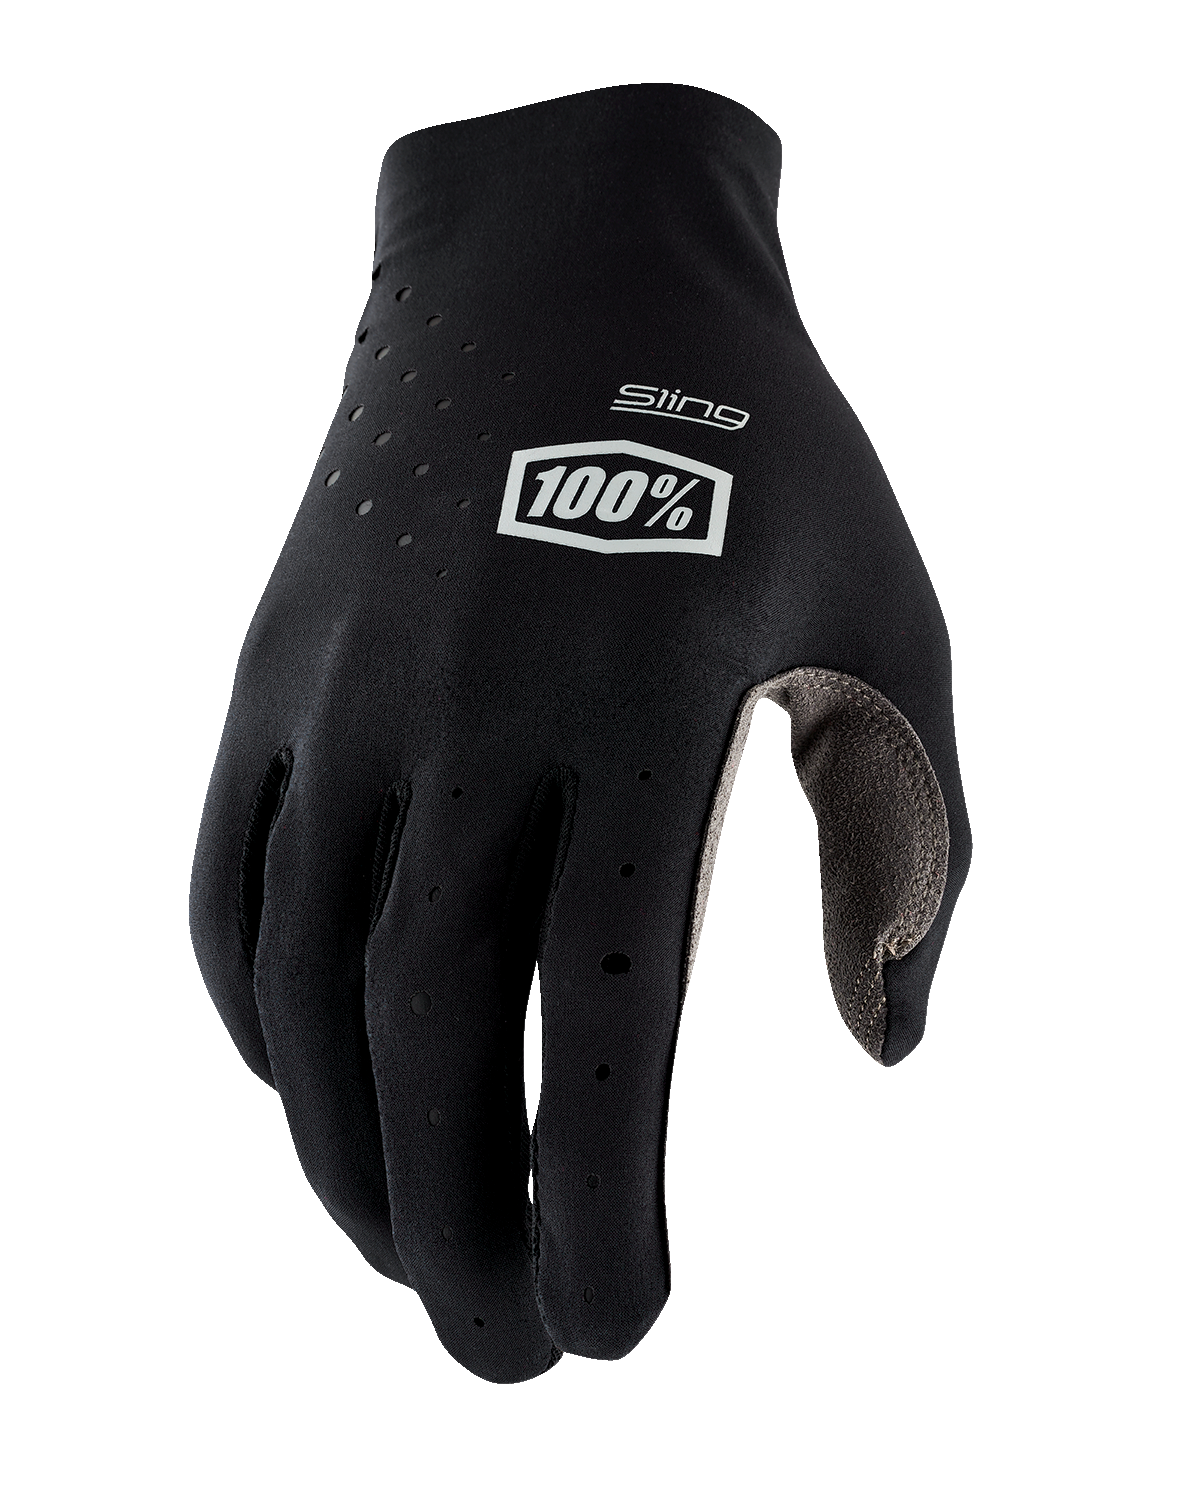 100% Sling MX Gloves - Black - Large 10023-00002